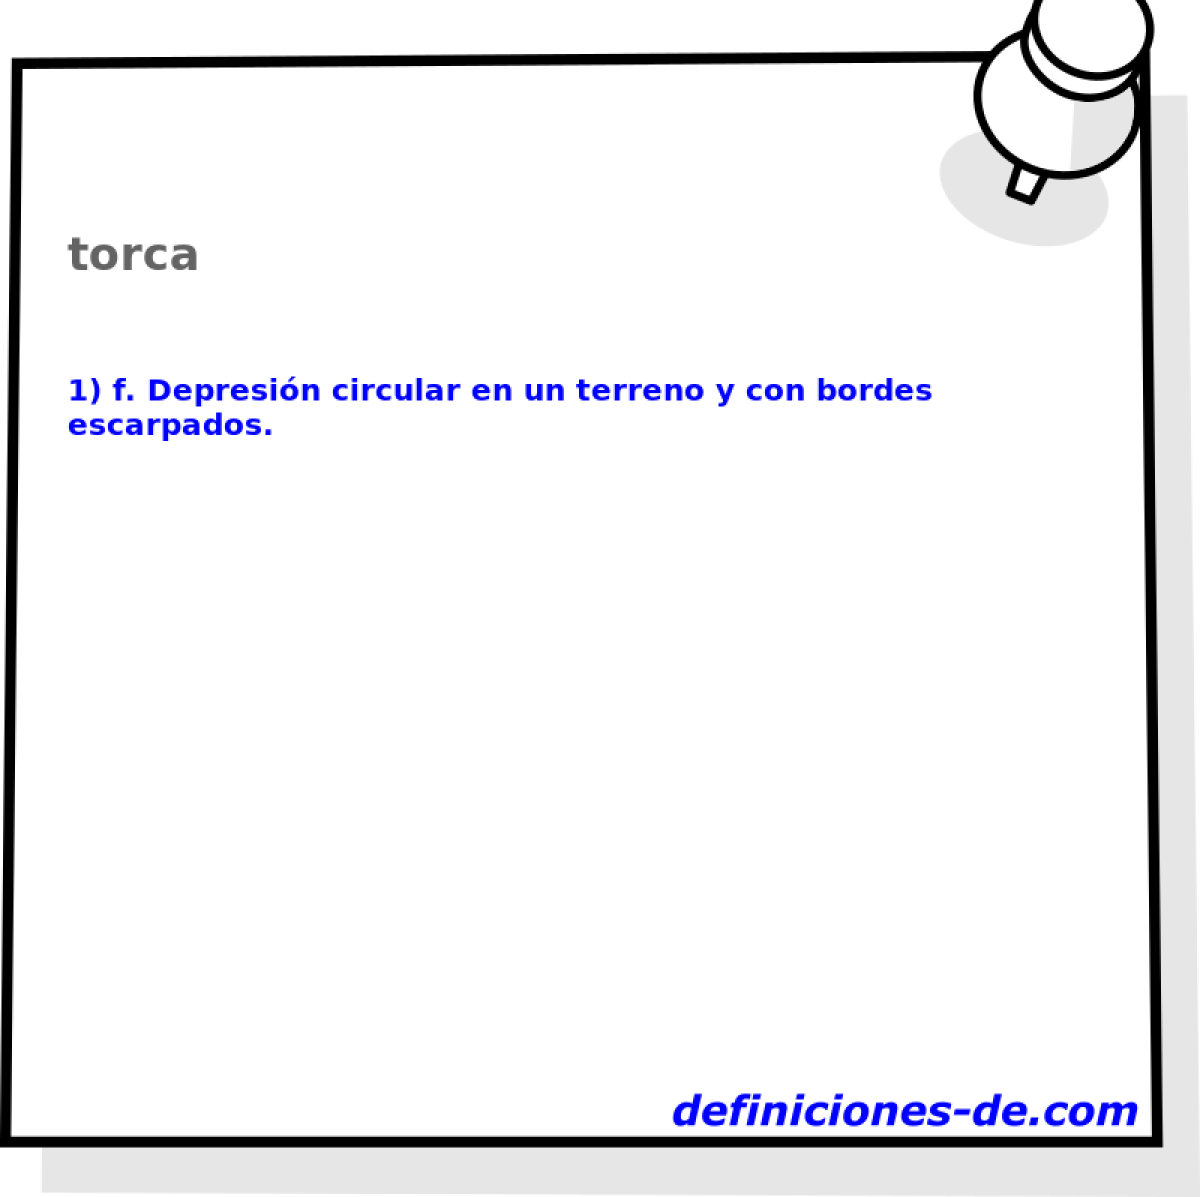 torca 